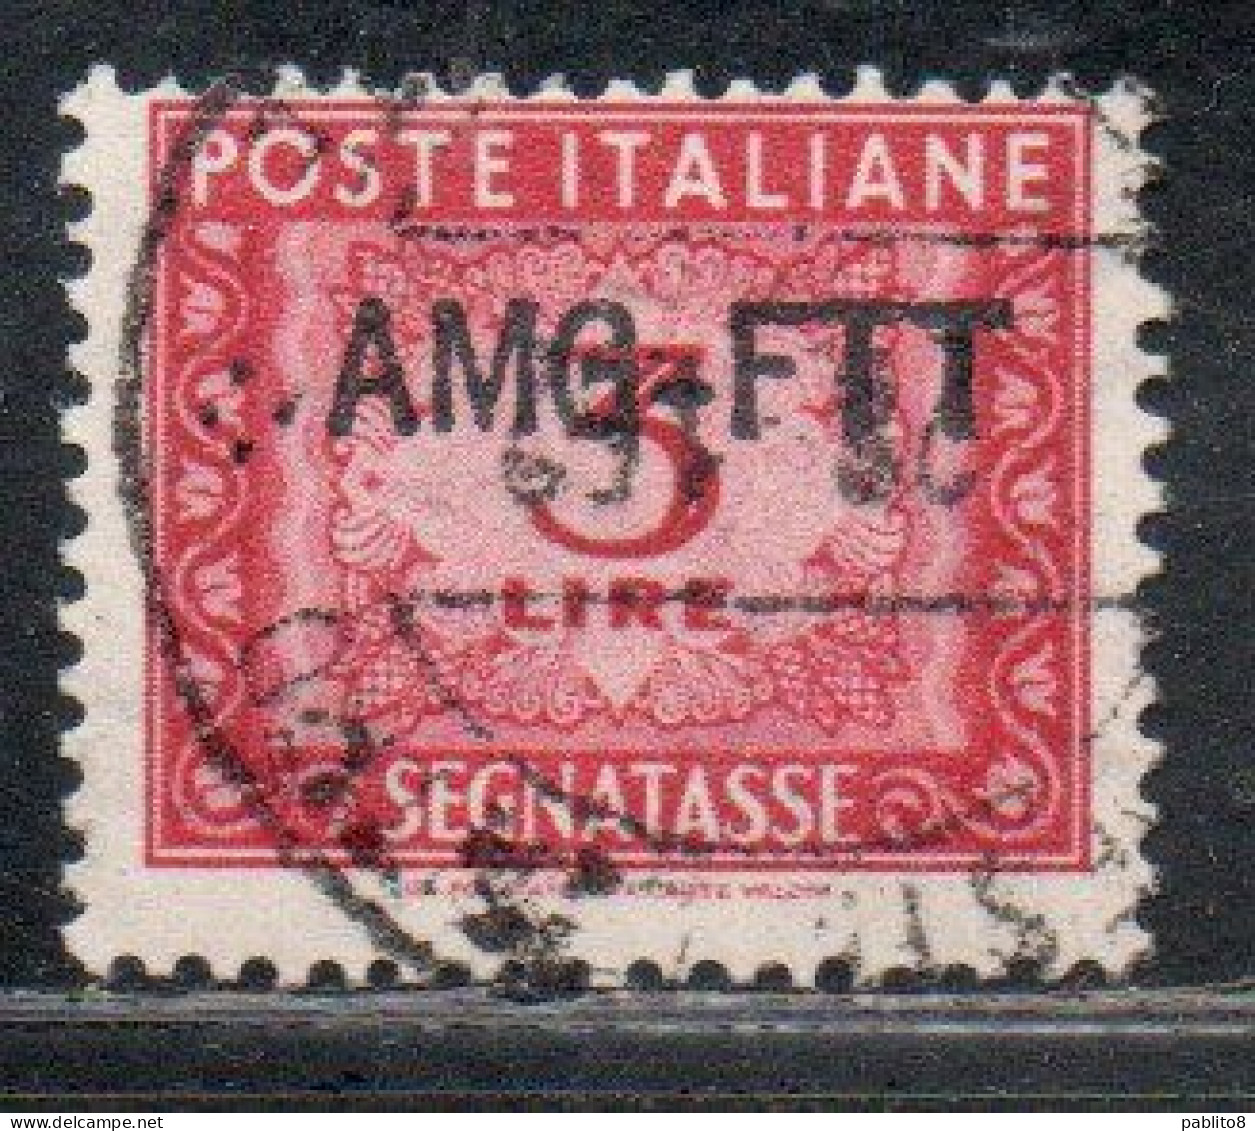 TRIESTE A 1949 1954AMG-FTT SOPRASTAMPATO D'ITALIA ITALY OVERPRINTED SEGNATASSE POSTAGE DUE TAXES TASSE LIRE 3 USATO USED - Strafport